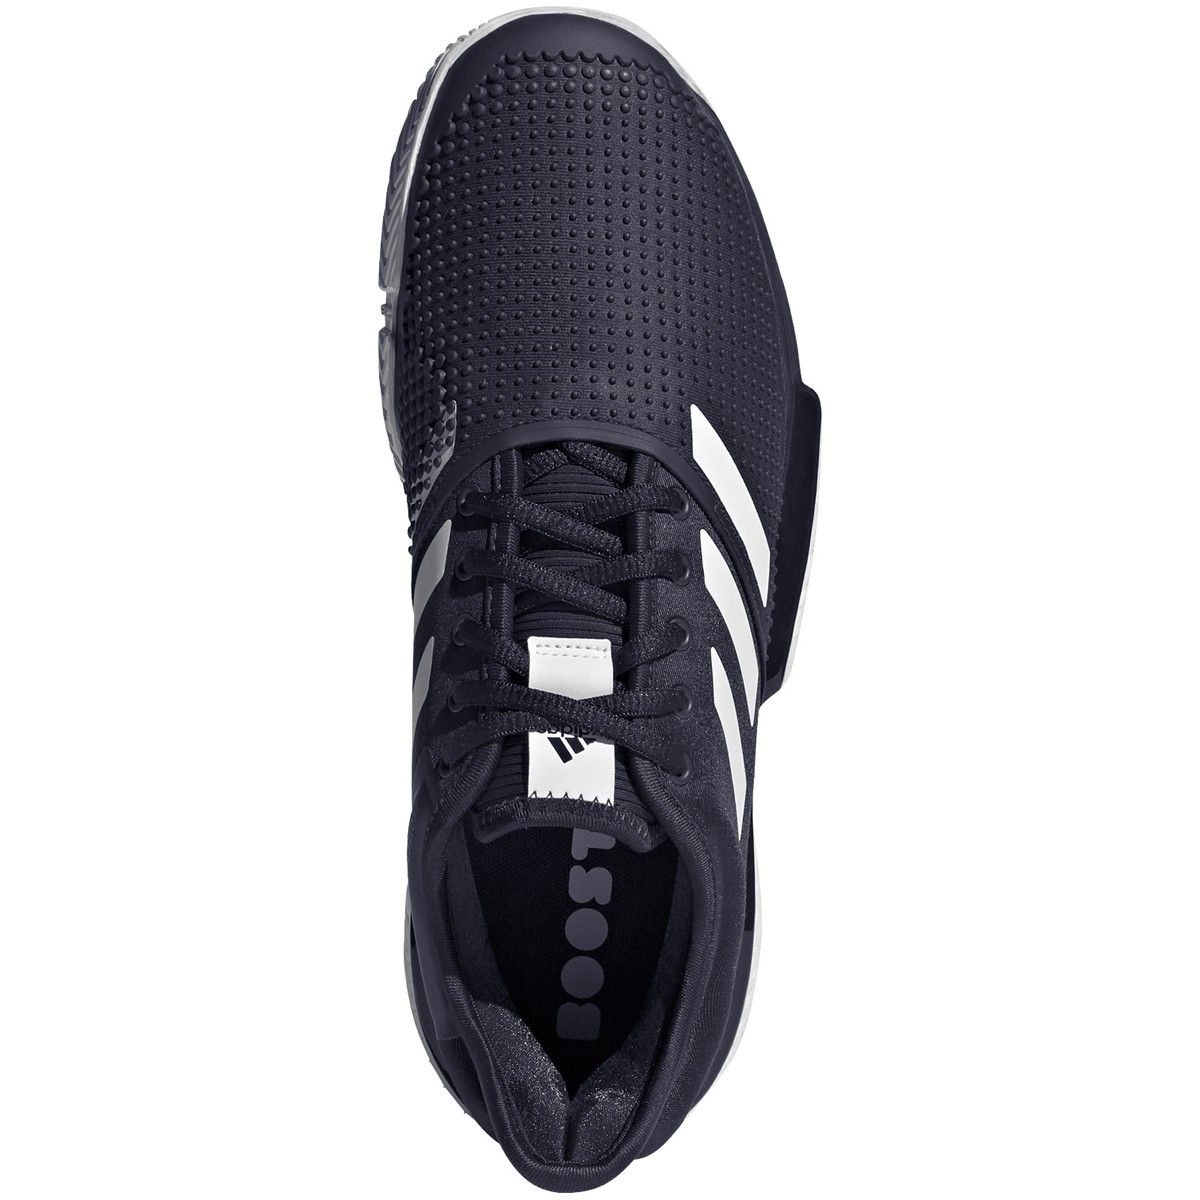 adidas Solecourt Boost Men's Tennis Shoes FU8115